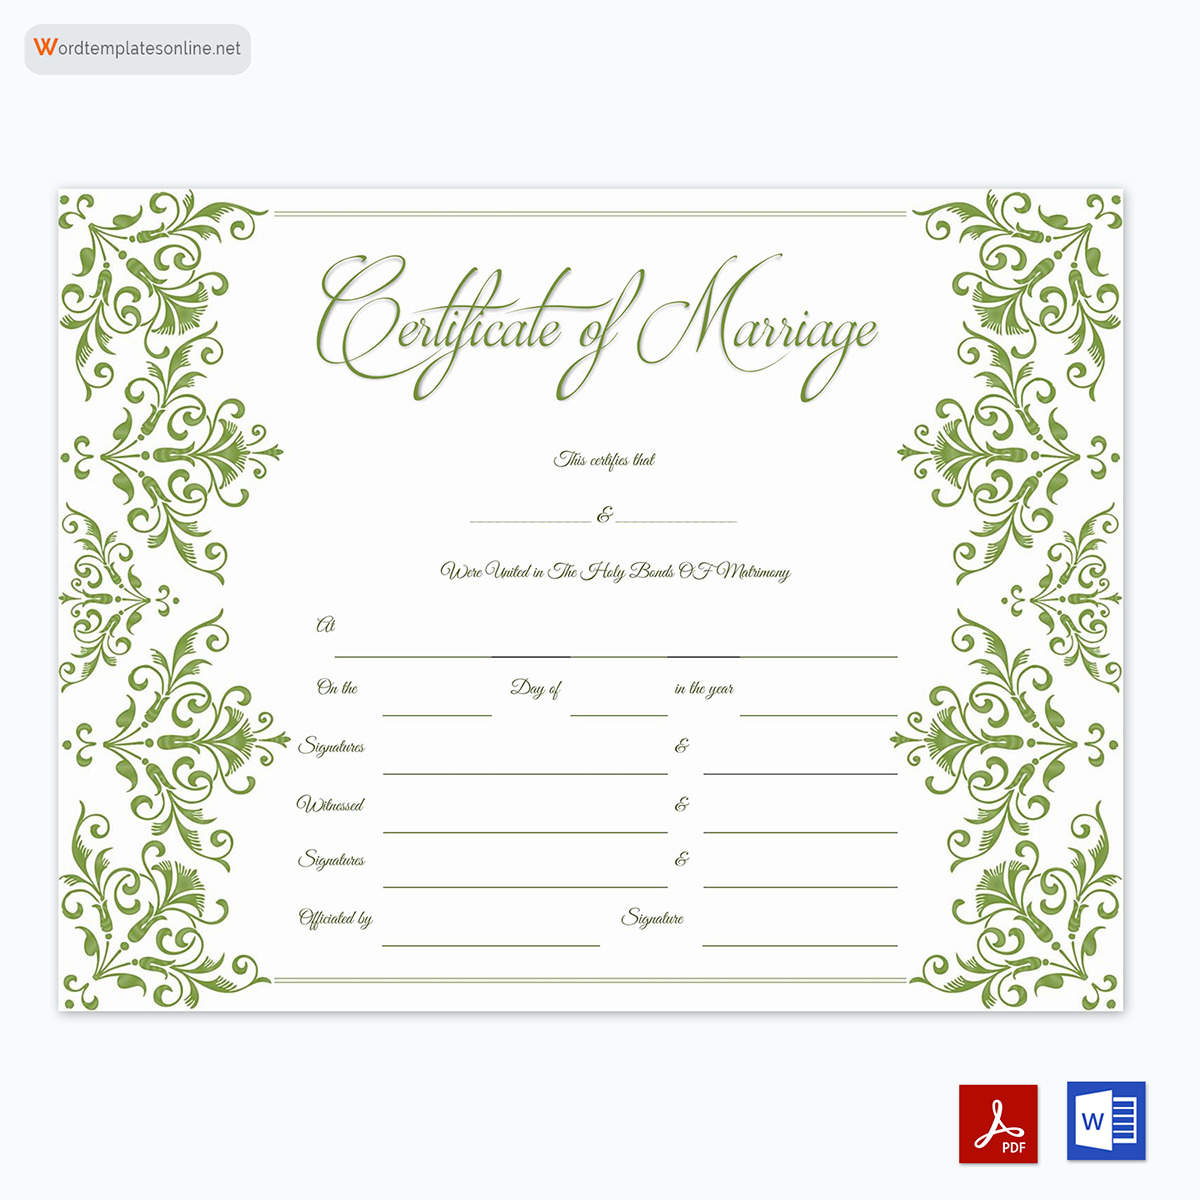  marriage certificate florida